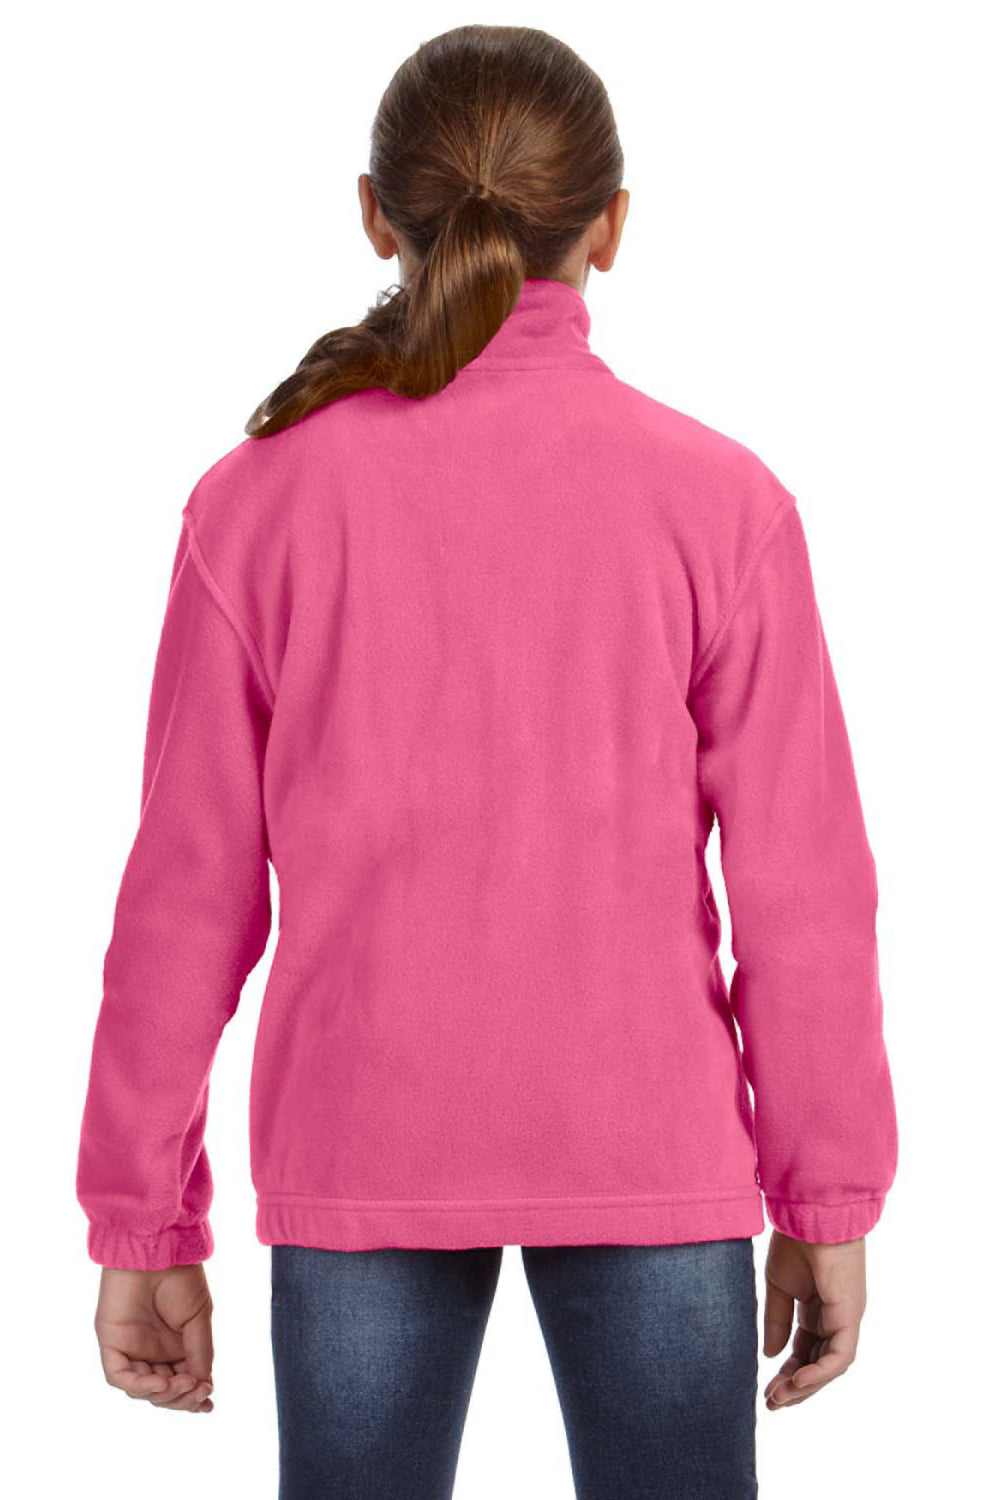 Harriton M990Y Youth Full Zip Fleece Jacket Charity Pink Back